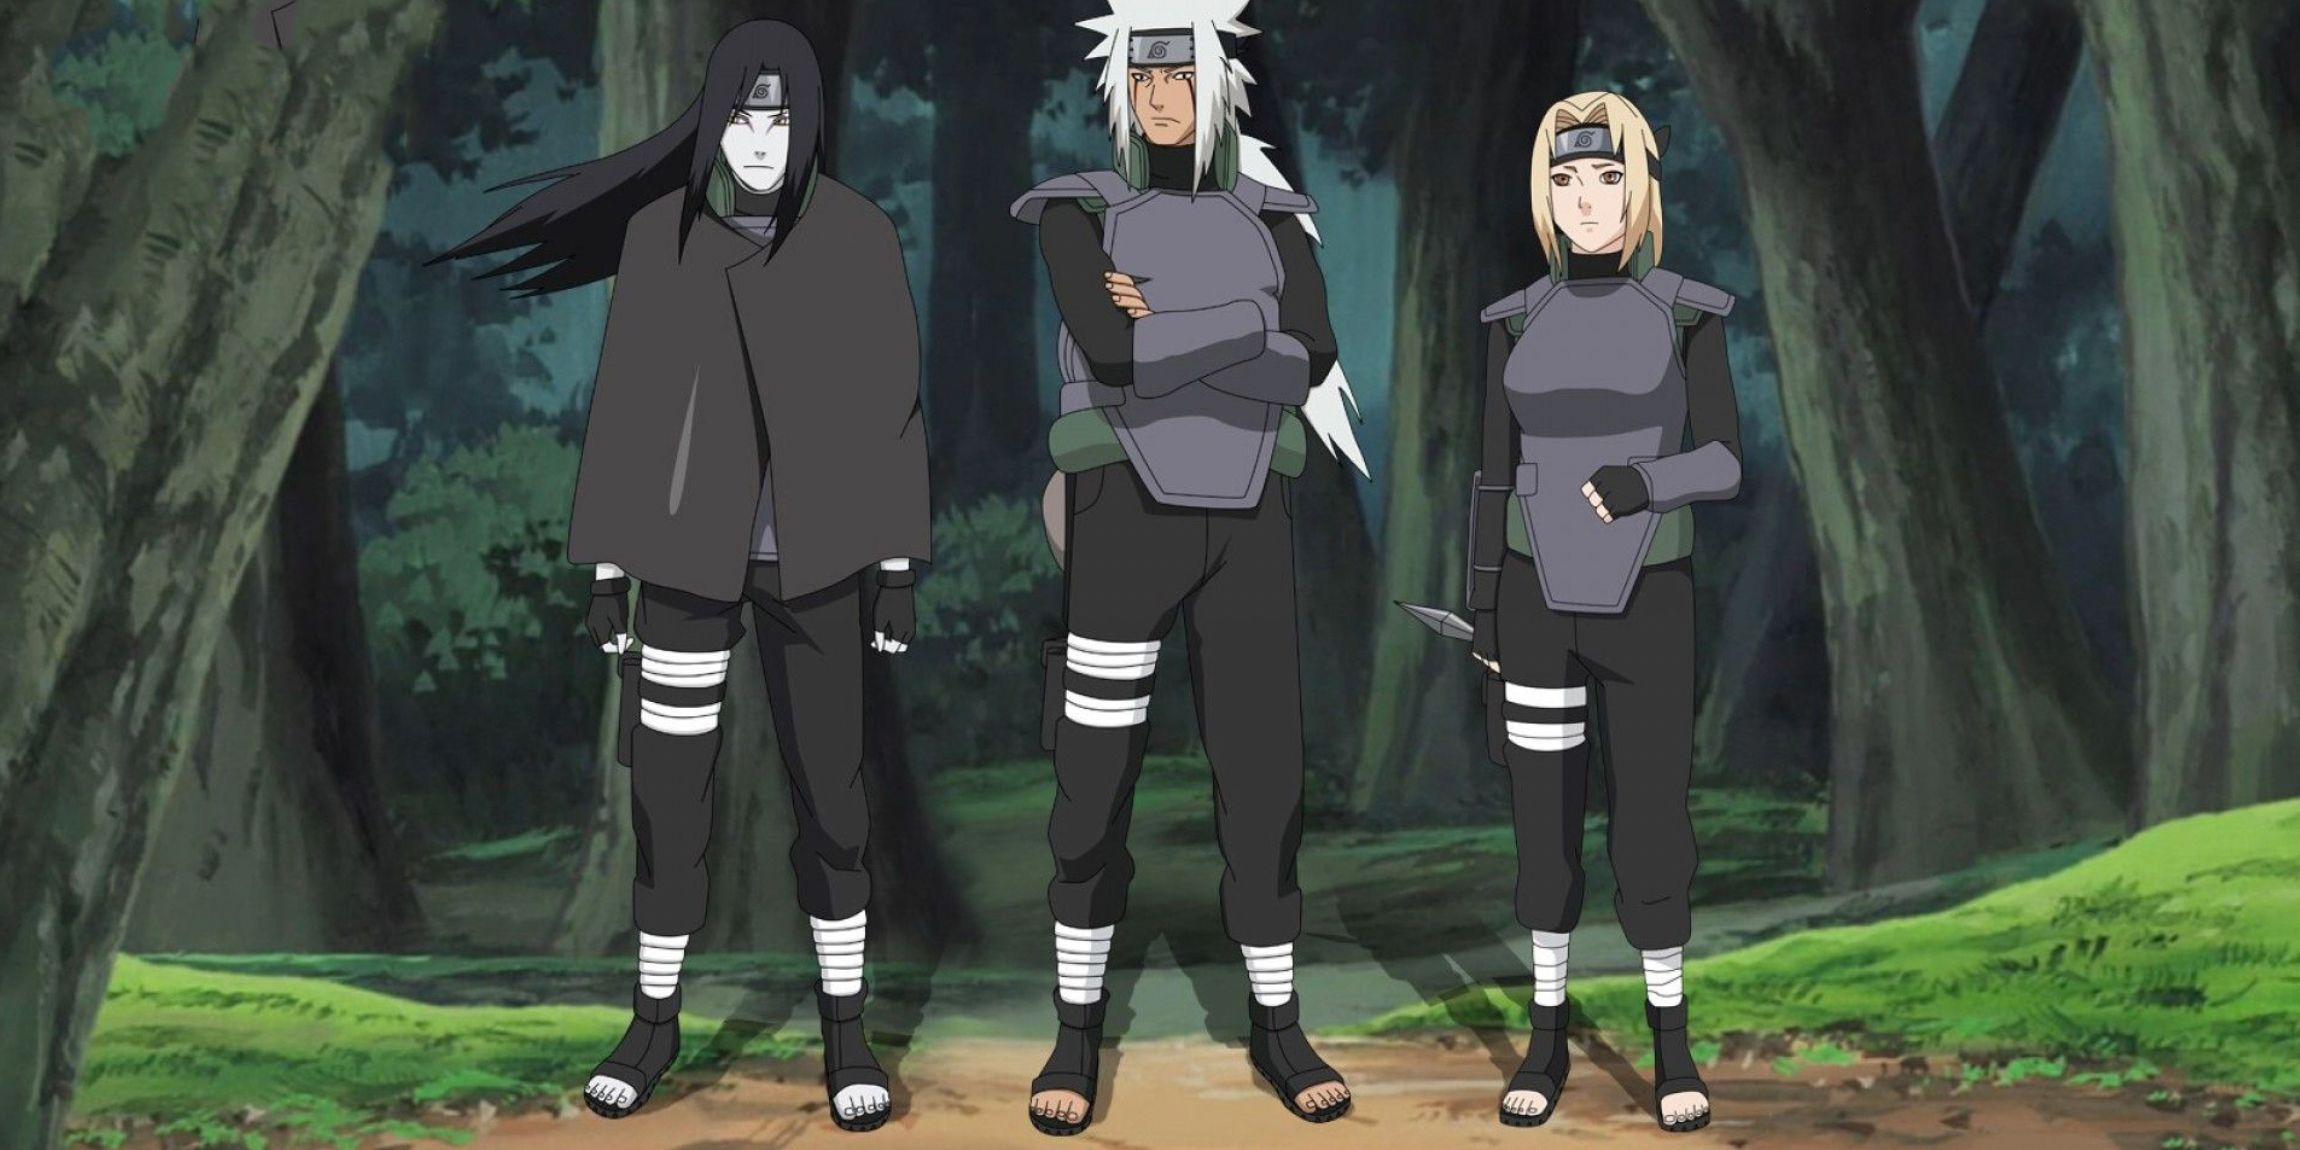 Orochimaru, Jiraiya, and Tsunade in their battle gear in a Naruto flashback